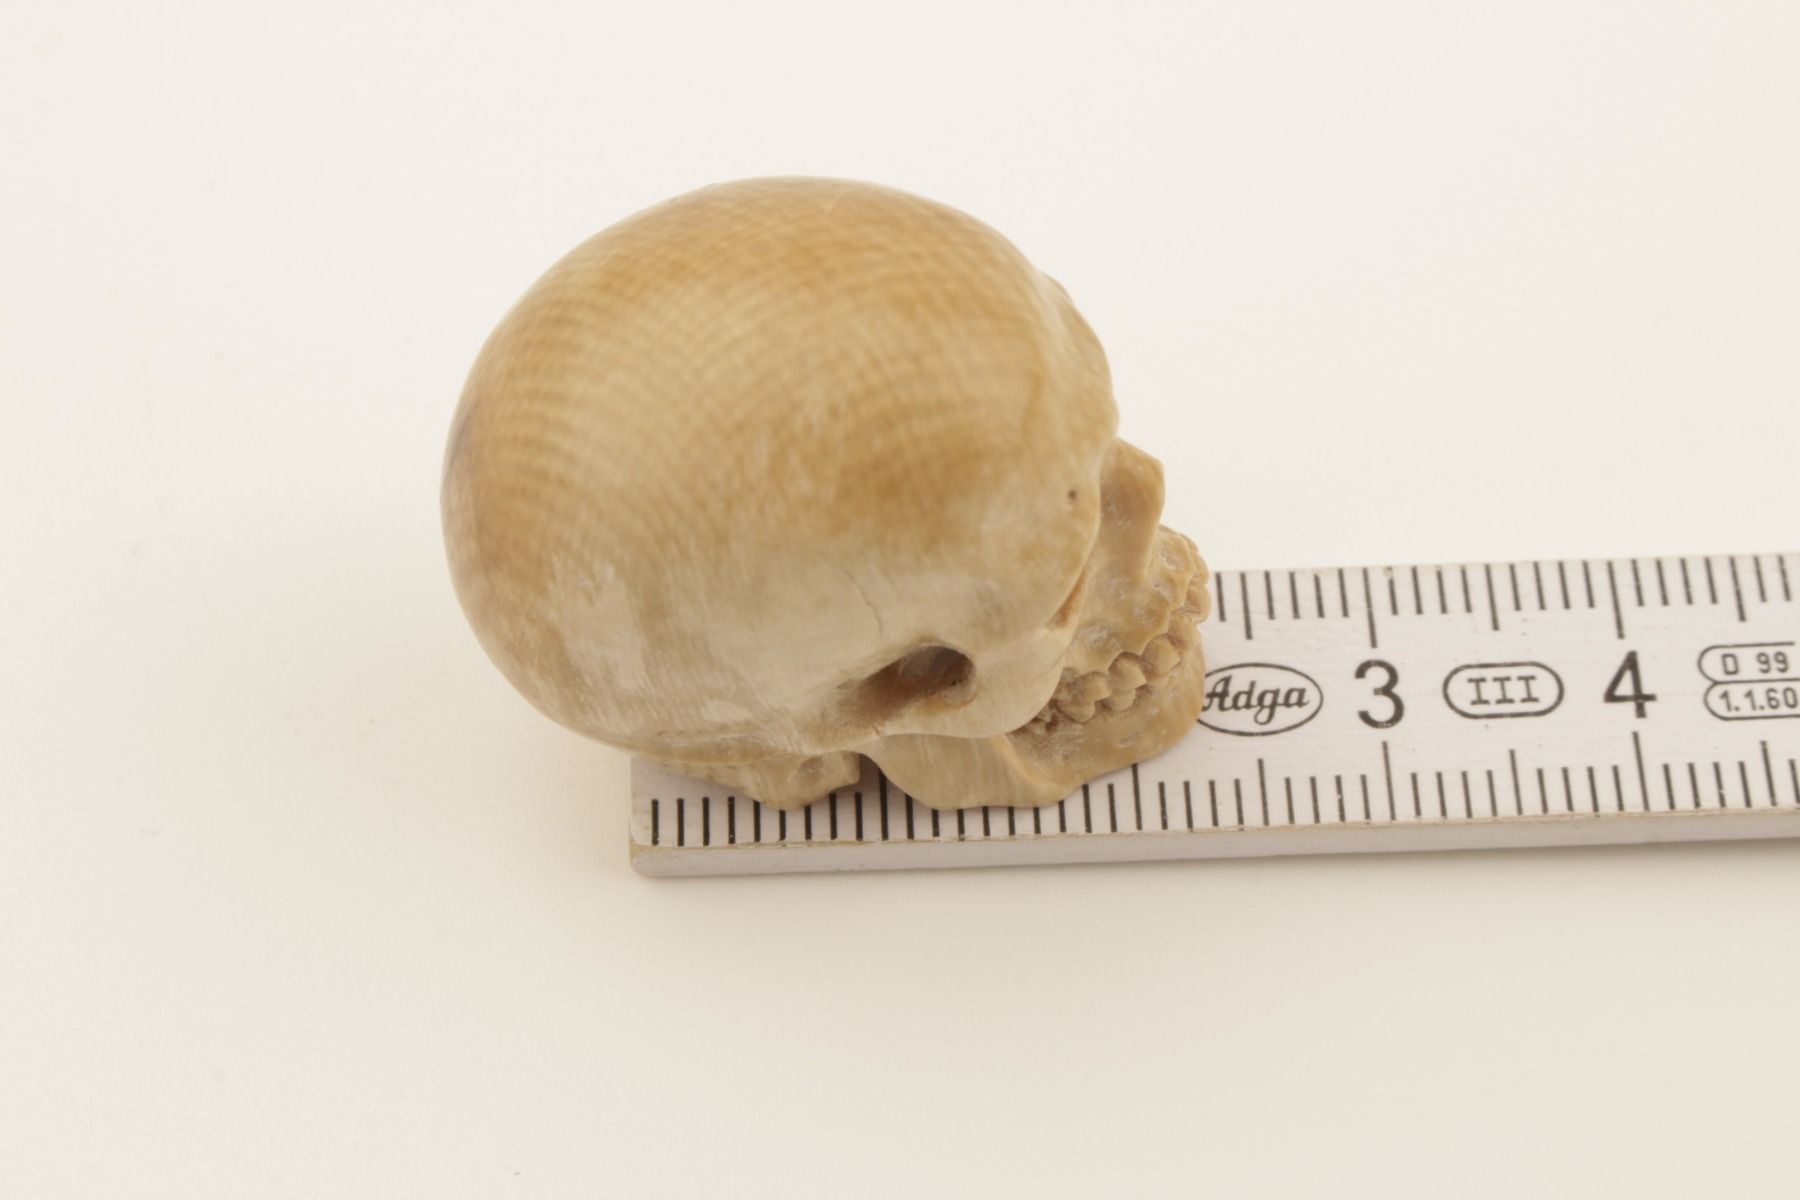 Brown mammoth ivory skull